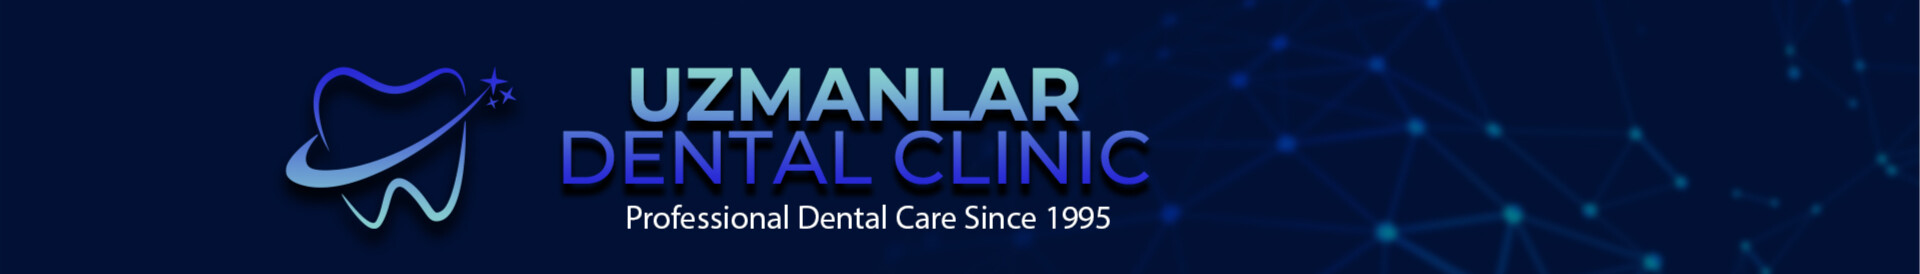 Uzmanlar Dental Clinic - Cover Photo